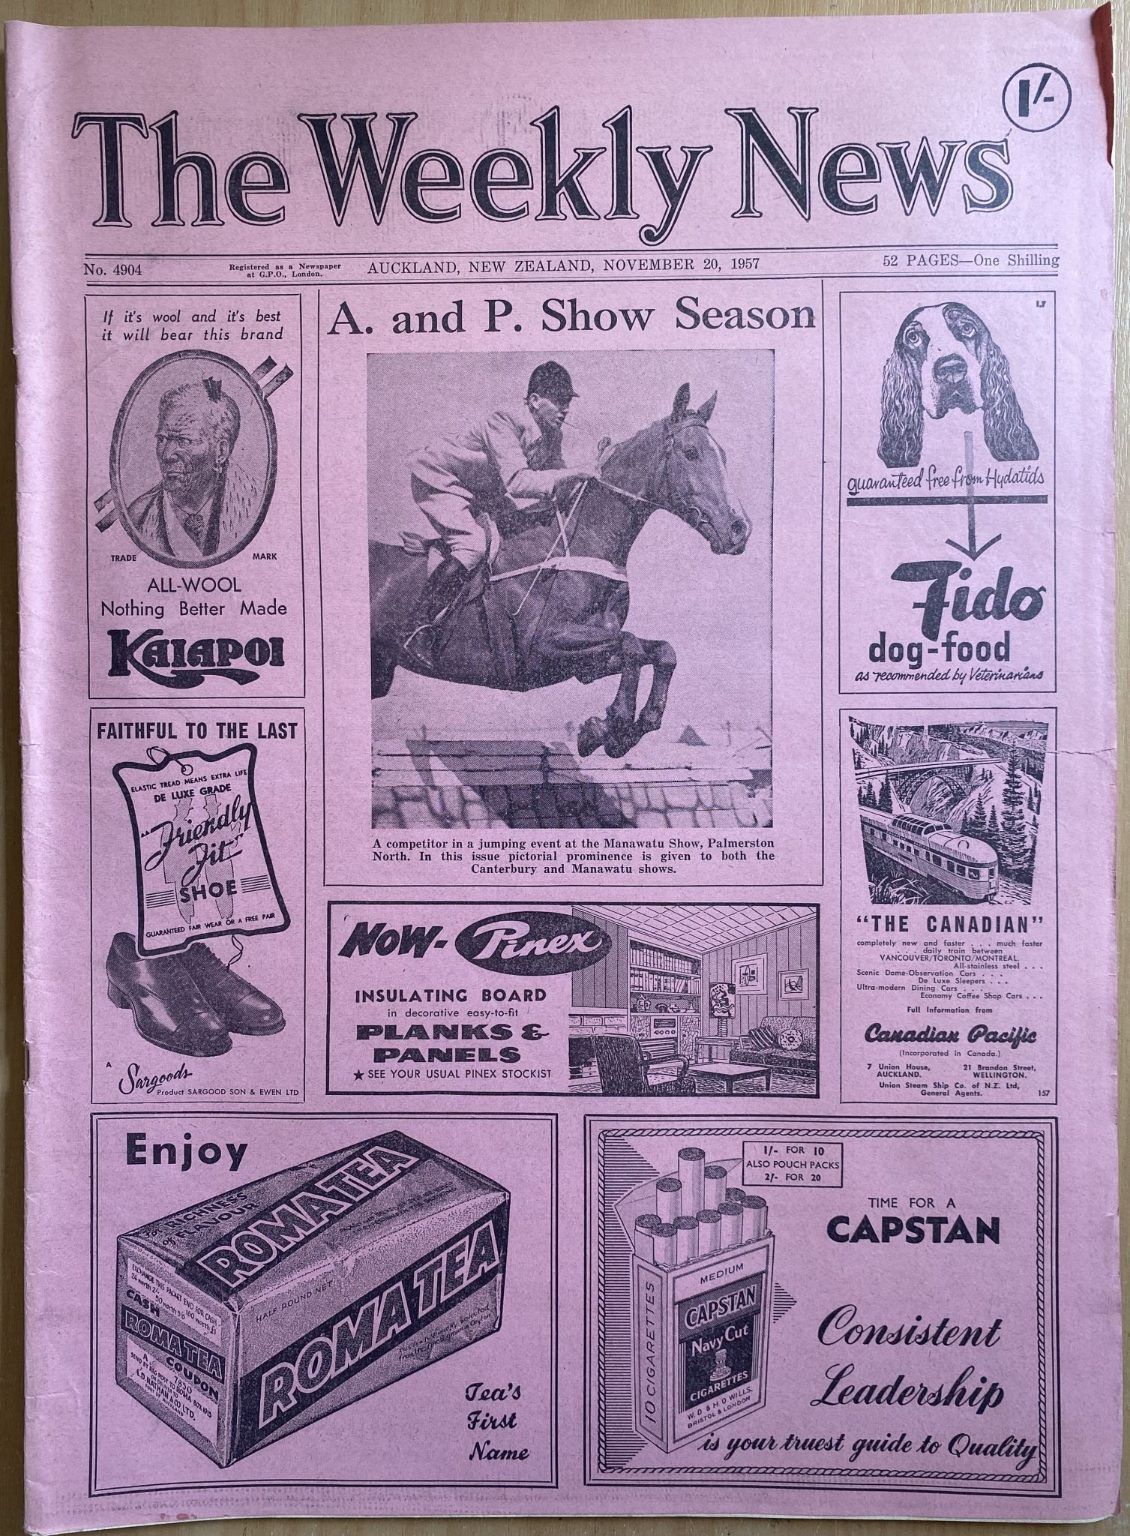 OLD NEWSPAPER: The Weekly News, No. 4904, 20 November 1957